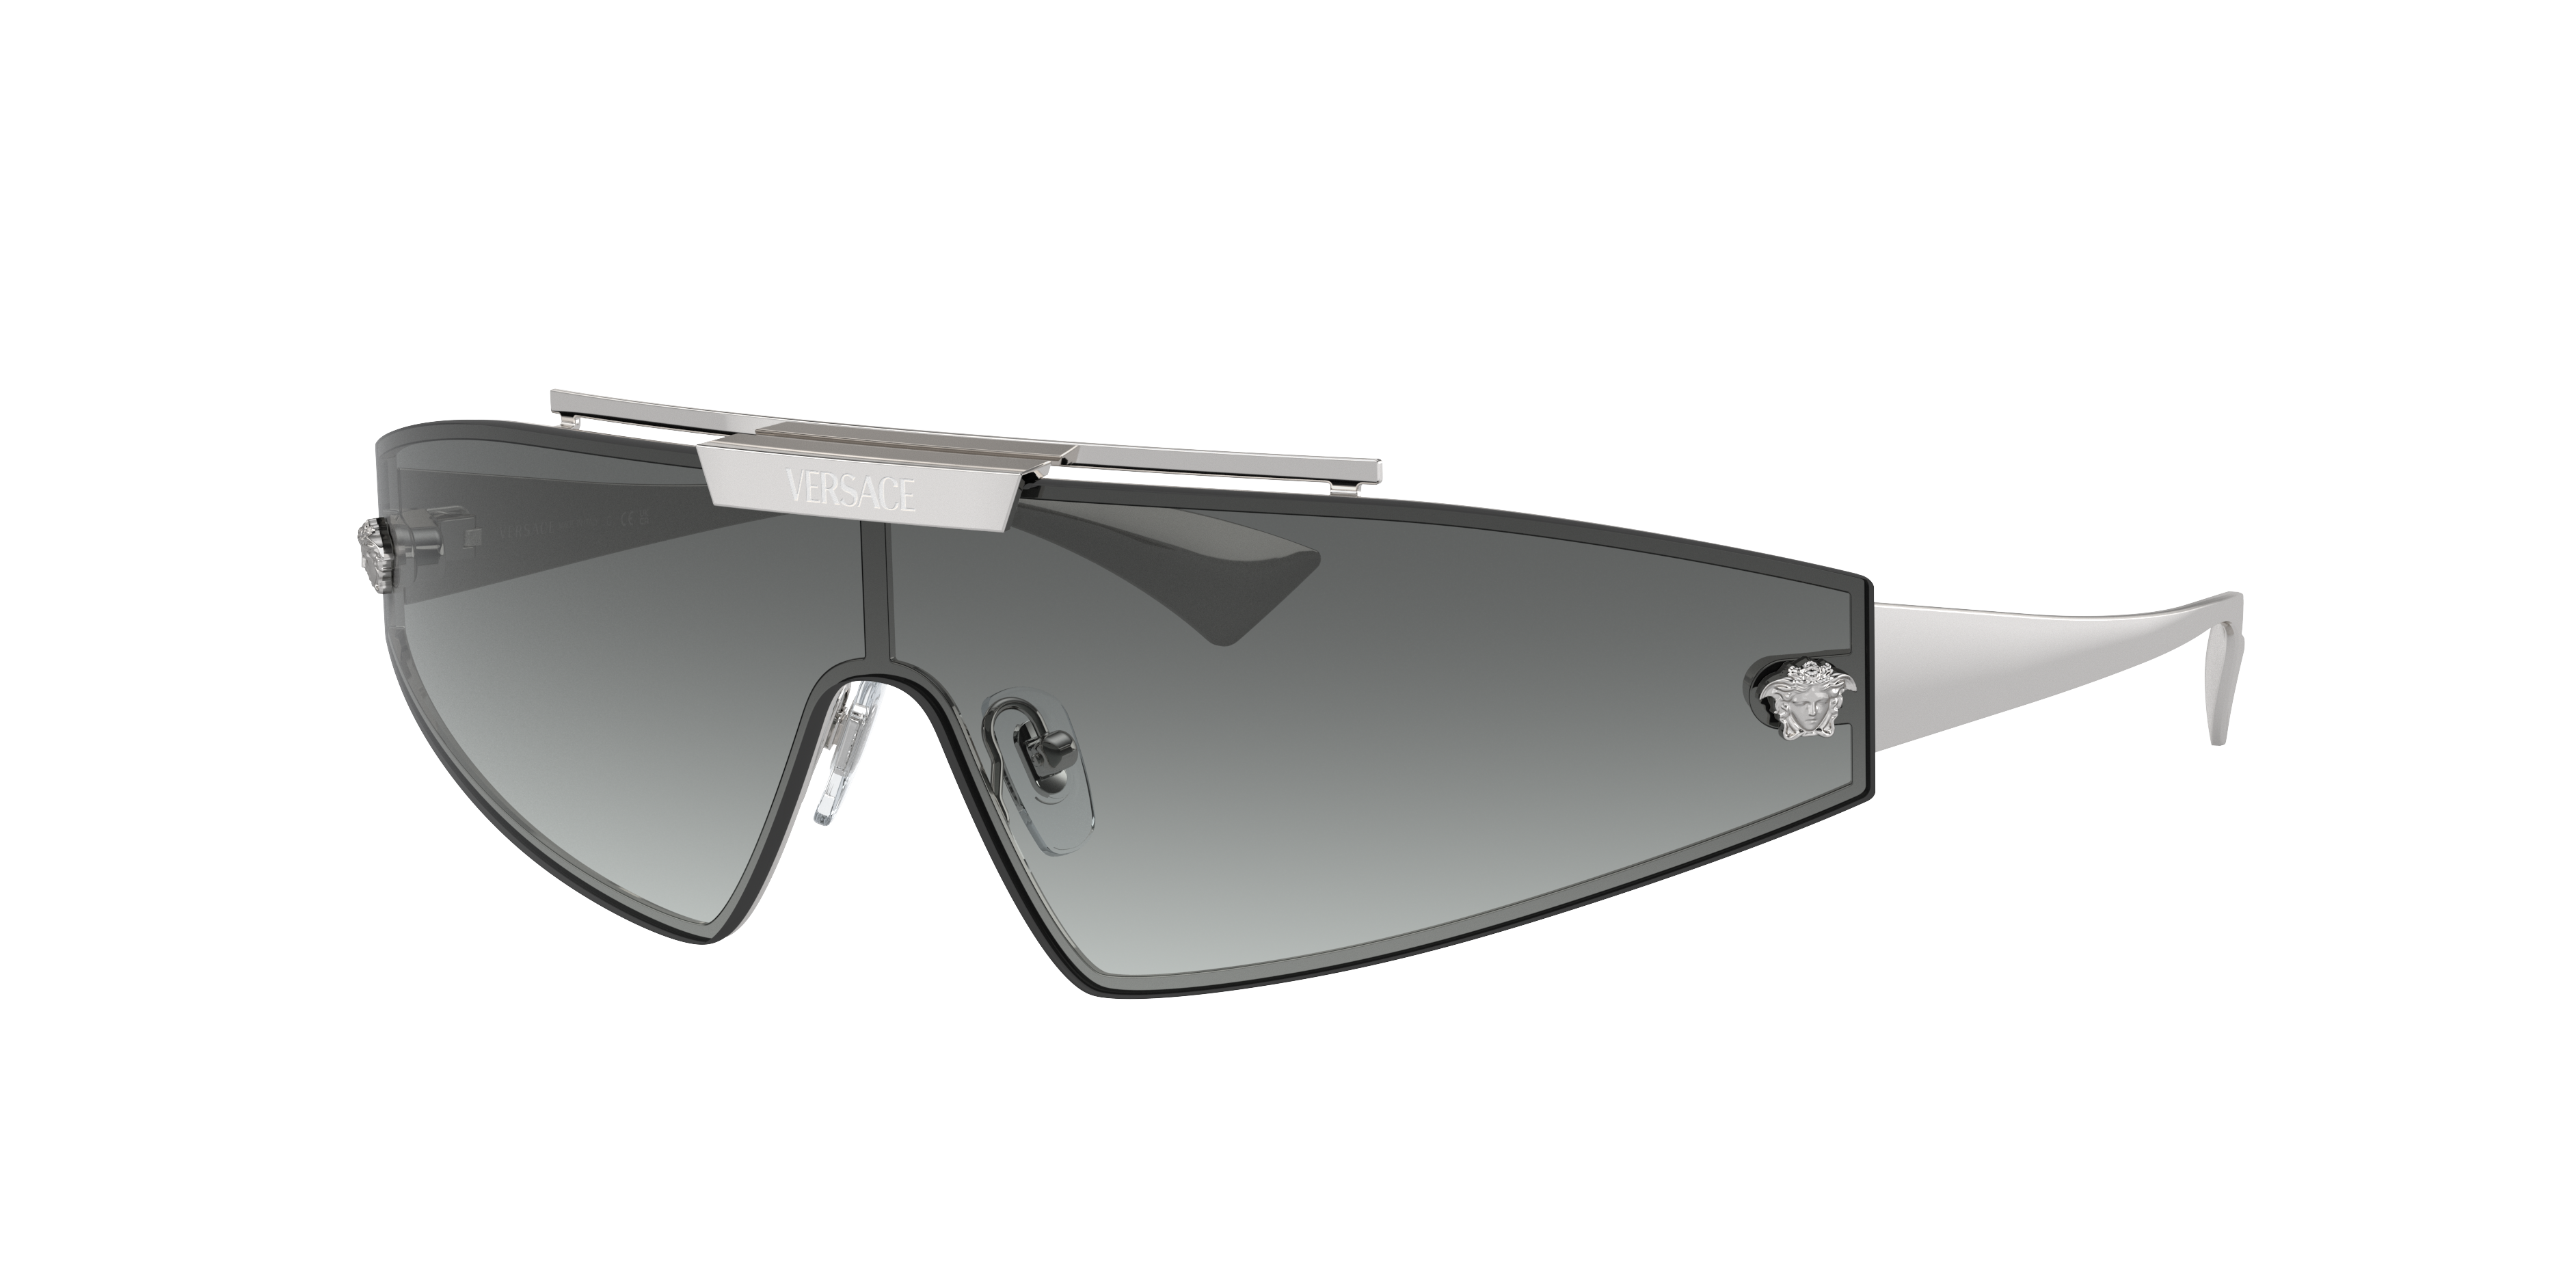 VERSACE VE2265 Silver - Women Luxury Sunglasses, Grey Gradient Lens